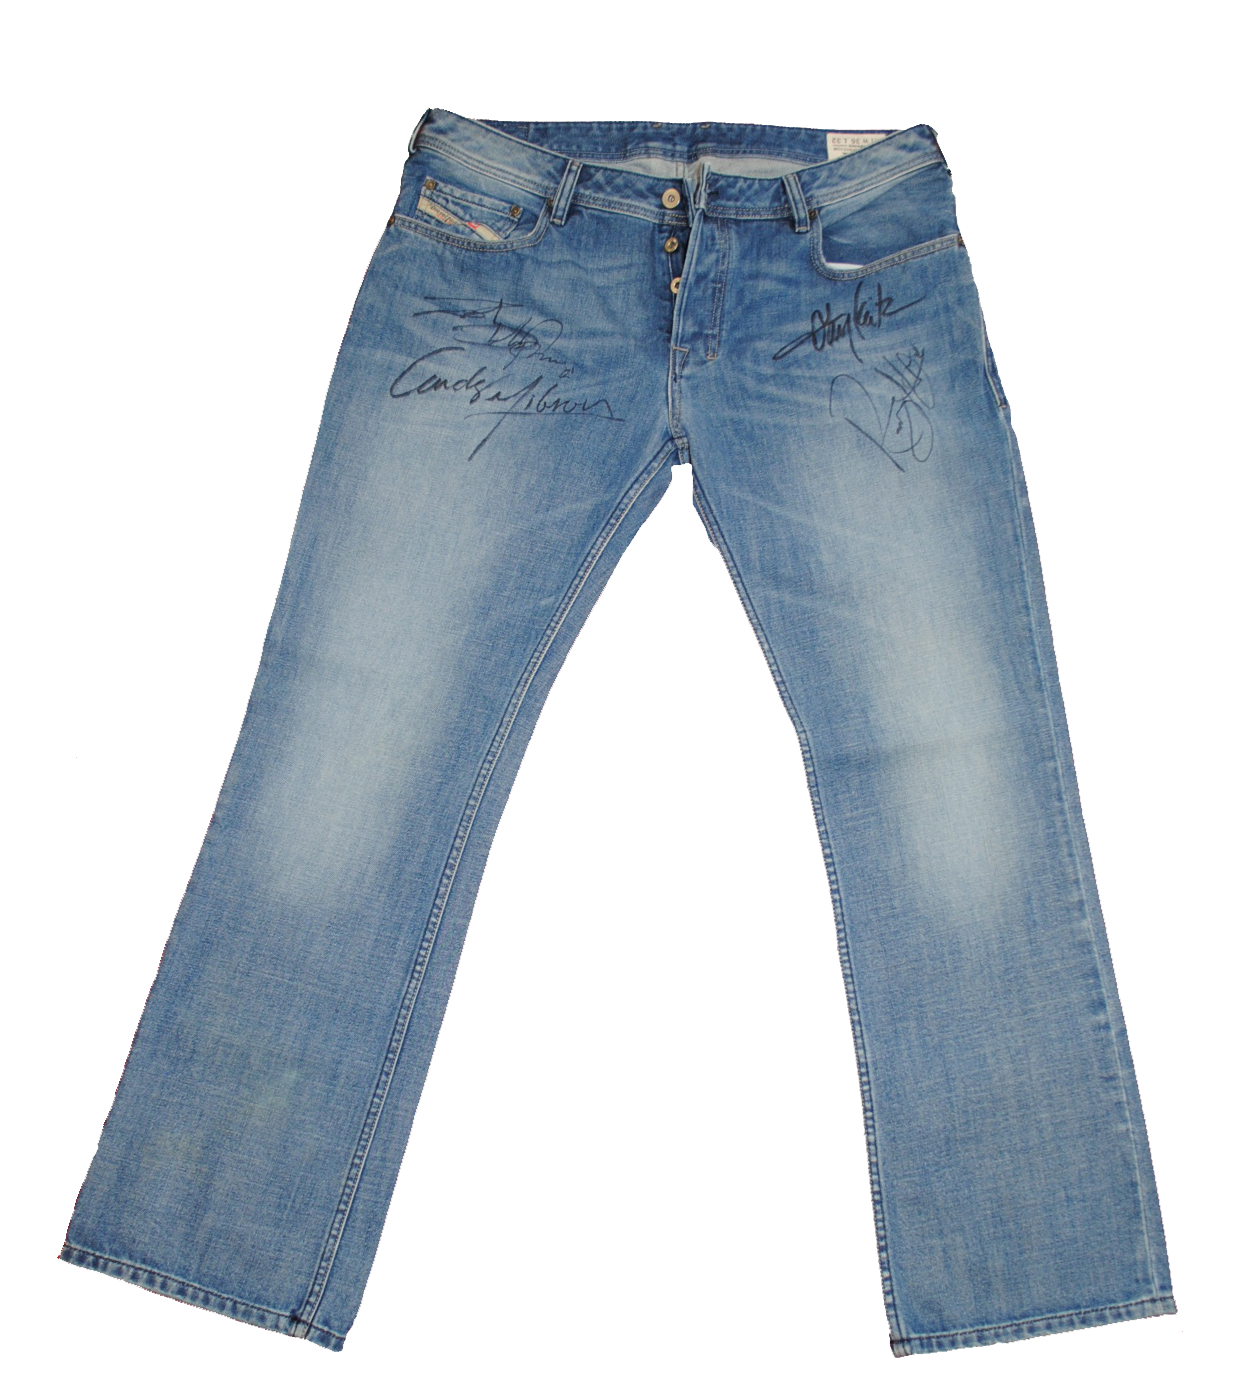 Blue Jeans Png Image - Jeans, Transparent background PNG HD thumbnail